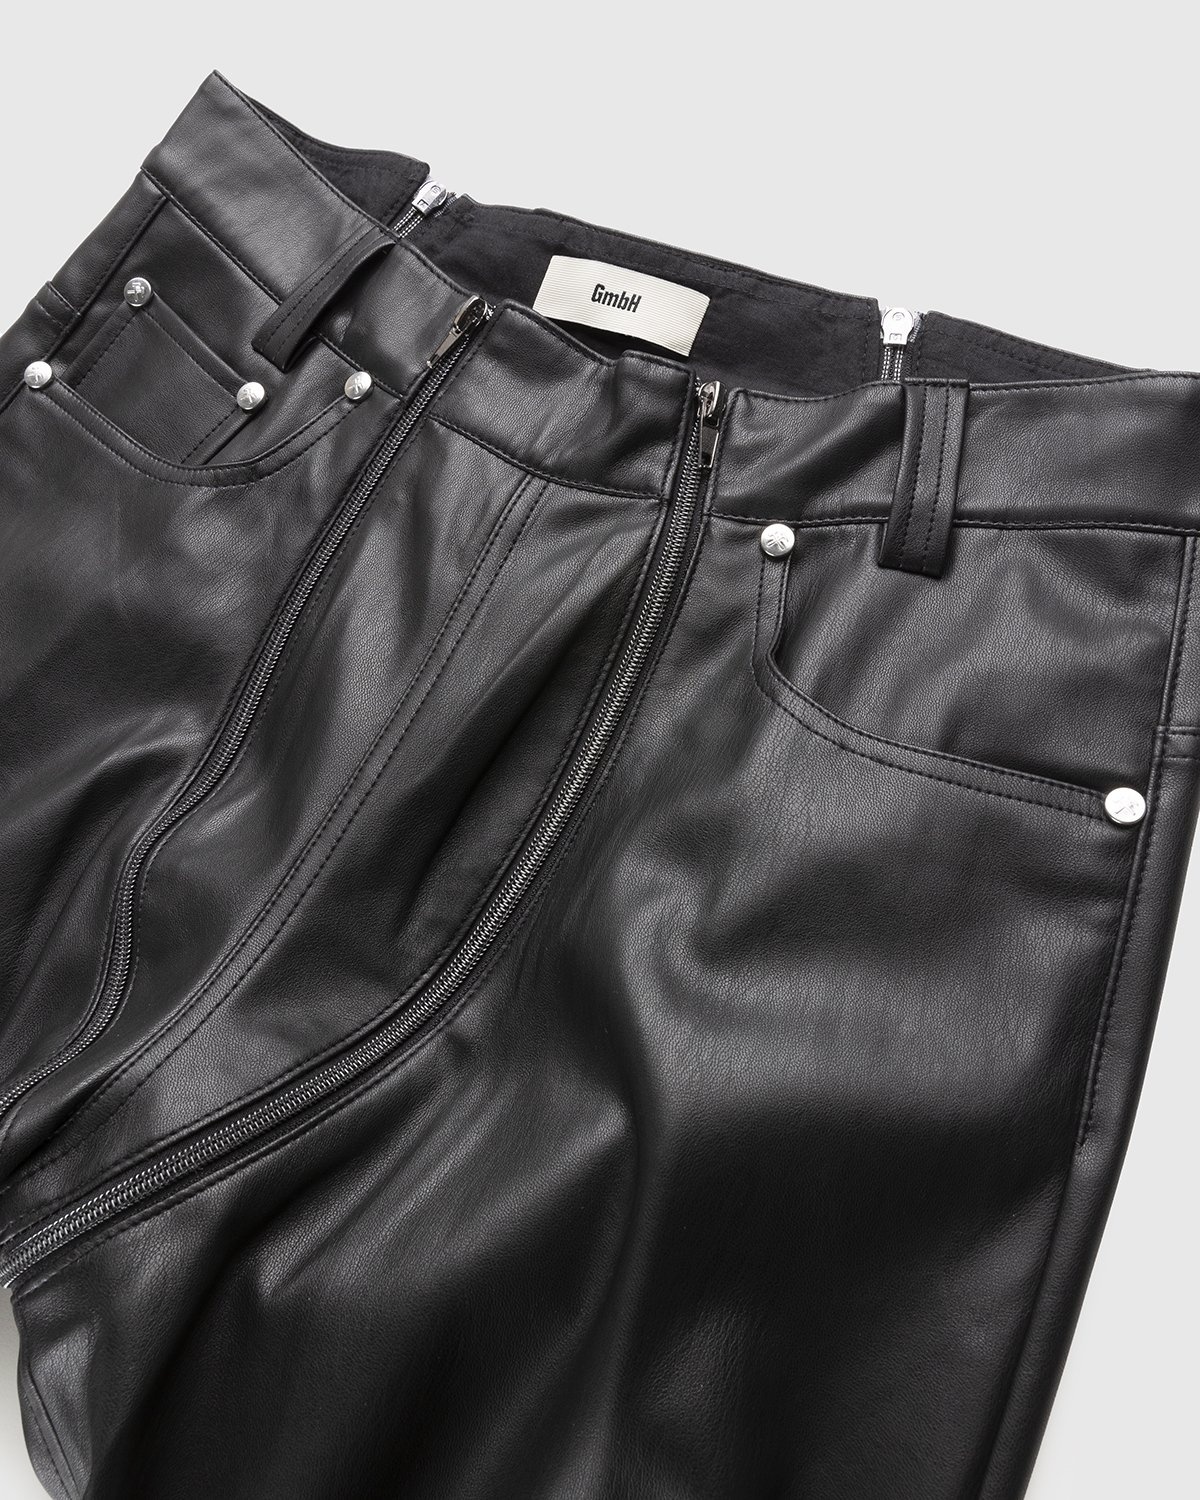 GmbH – Lata Pleather Pants Black - Leather Pants - Black - Image 7